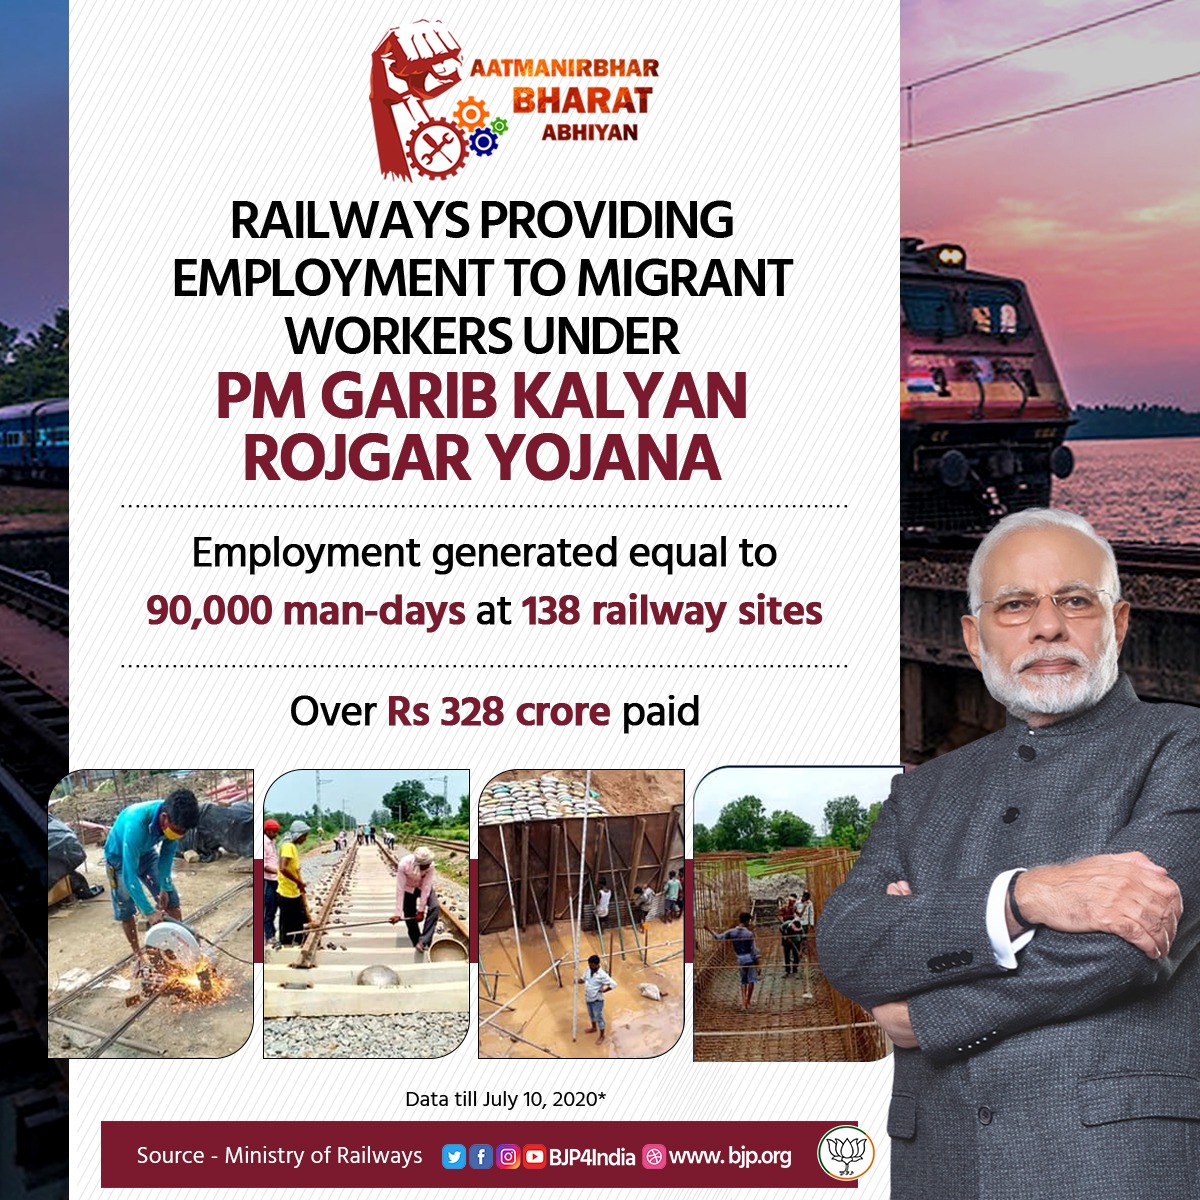 Railways is providing employment to migrant workers under PM Garib Kalyan Rojgar Yojana. So far, employment equal to 90,000 man-days has been generated at 138 railway sites. #AatmaNirbharBharat